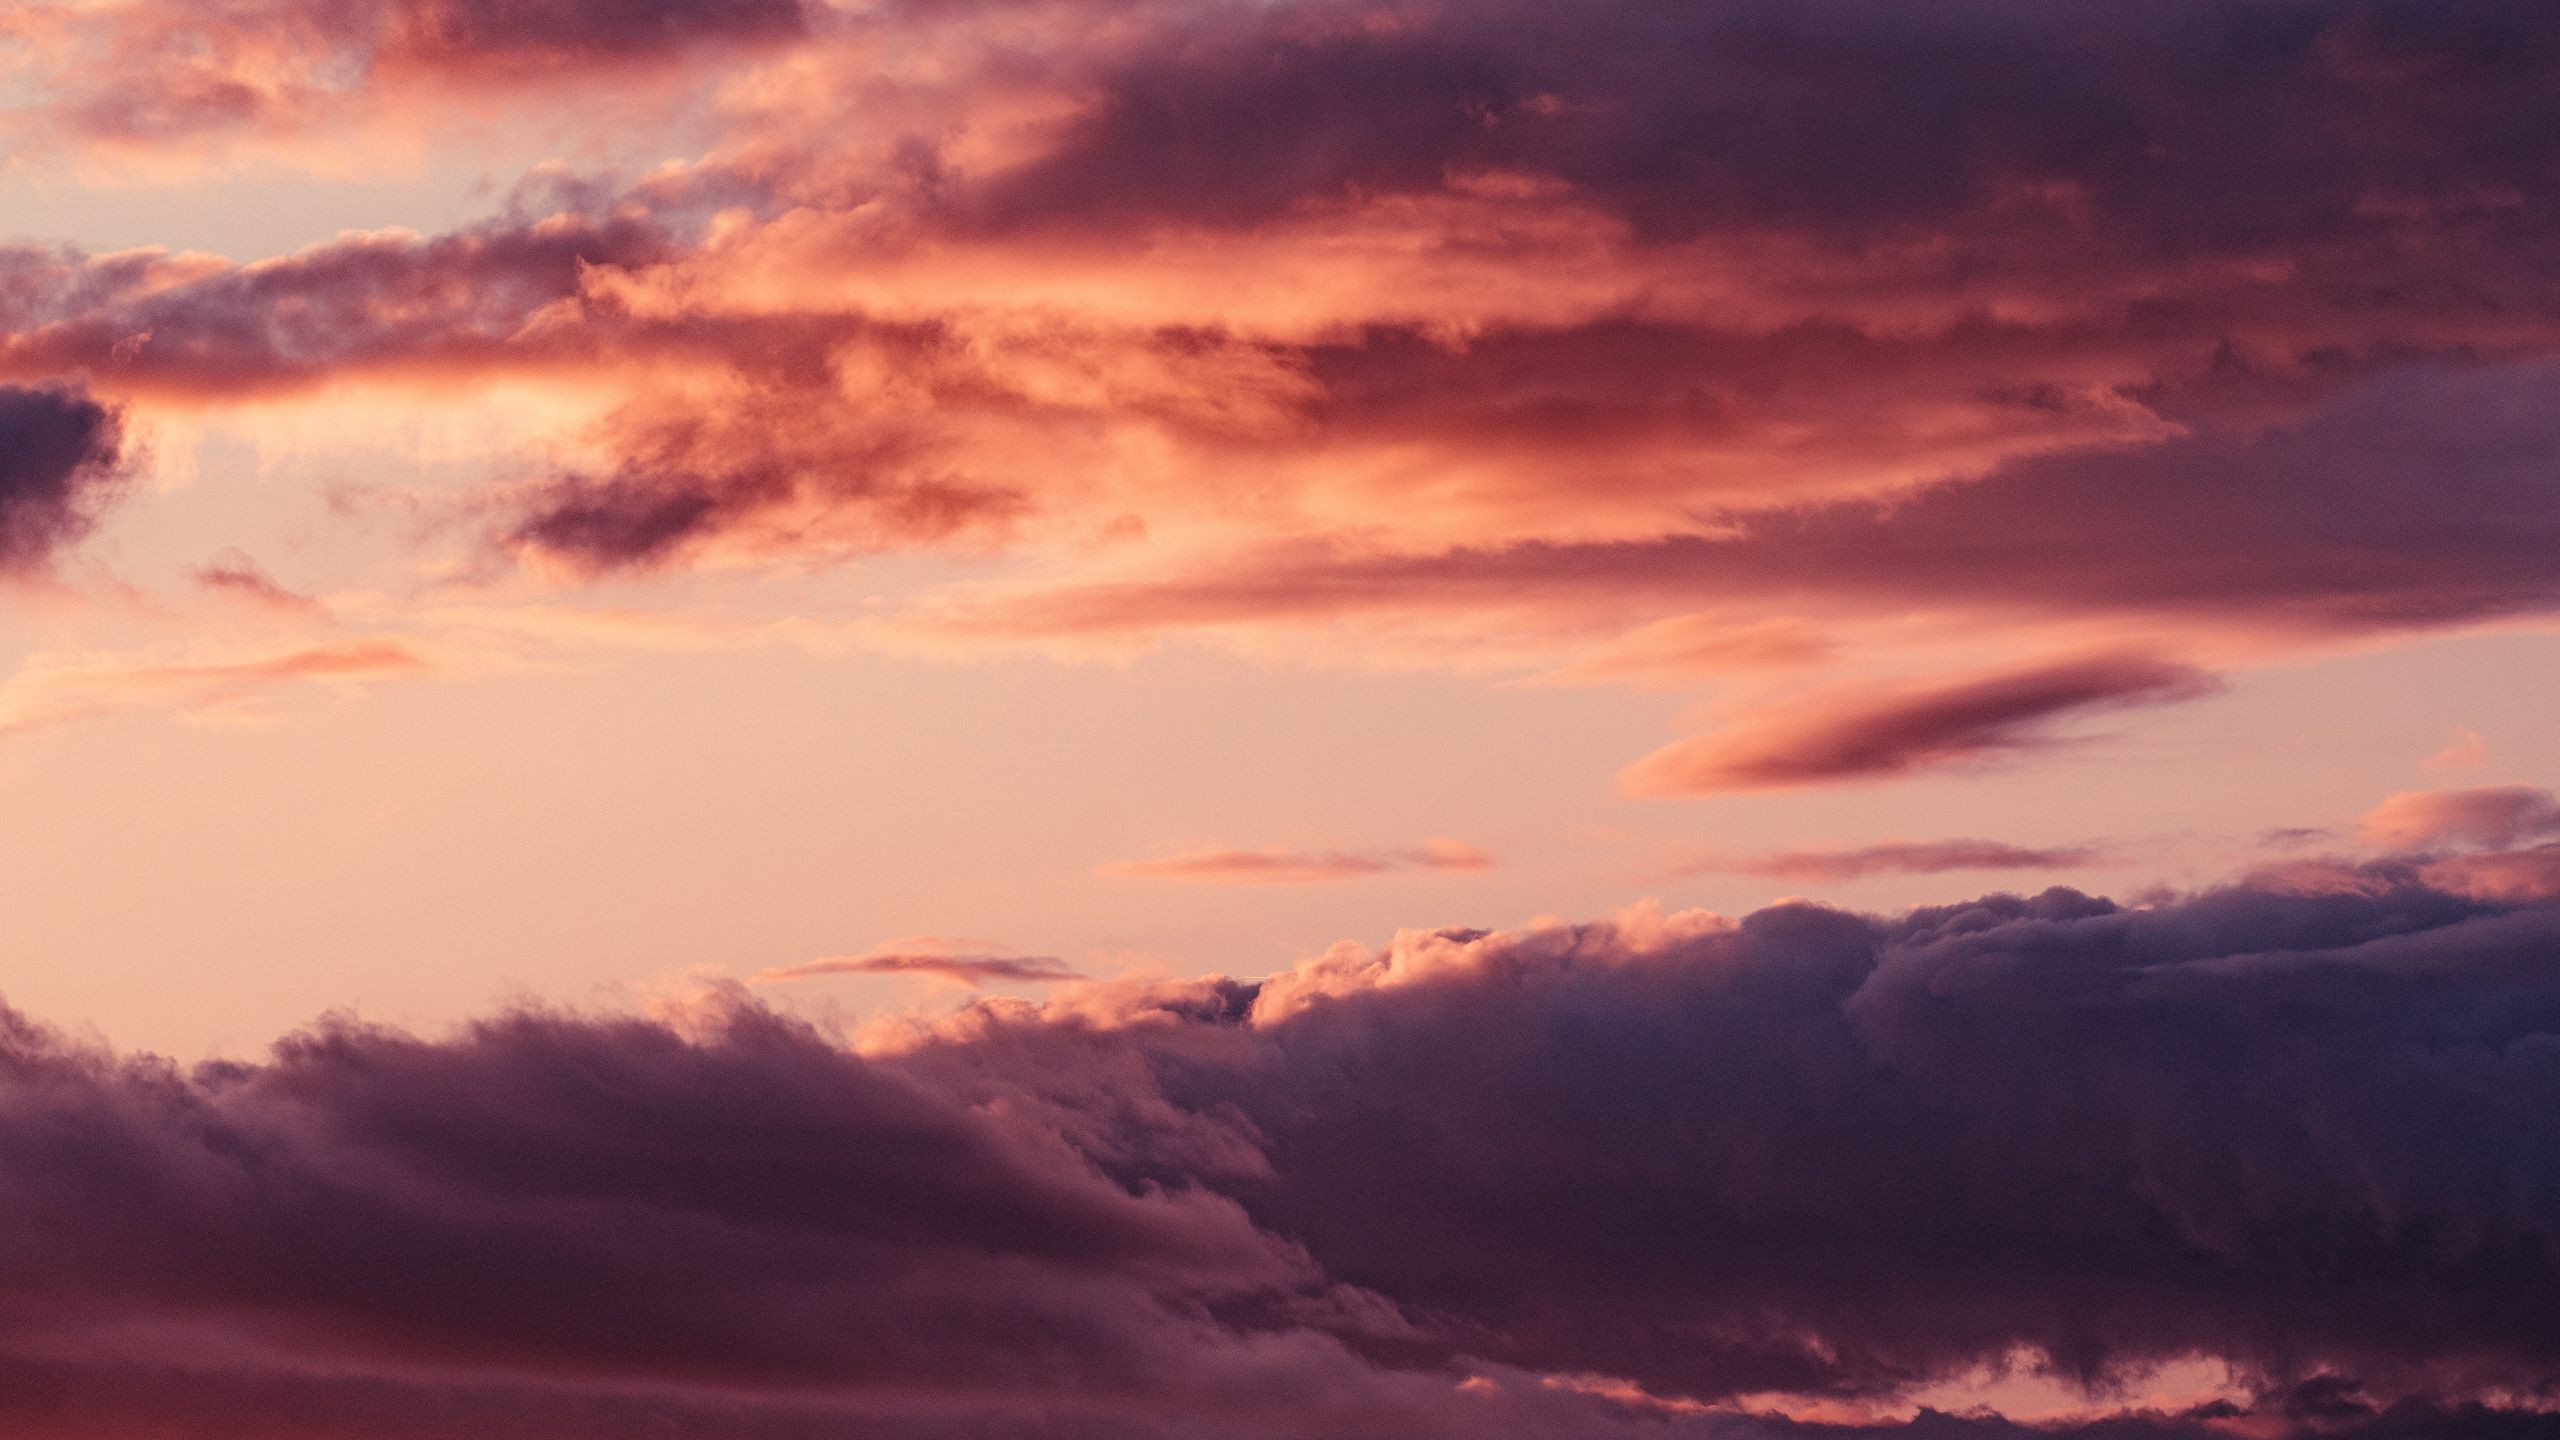 Фото закат, Wallpaper Cloudy Sky, пейзажи - бесплатные картинки на Fonwall